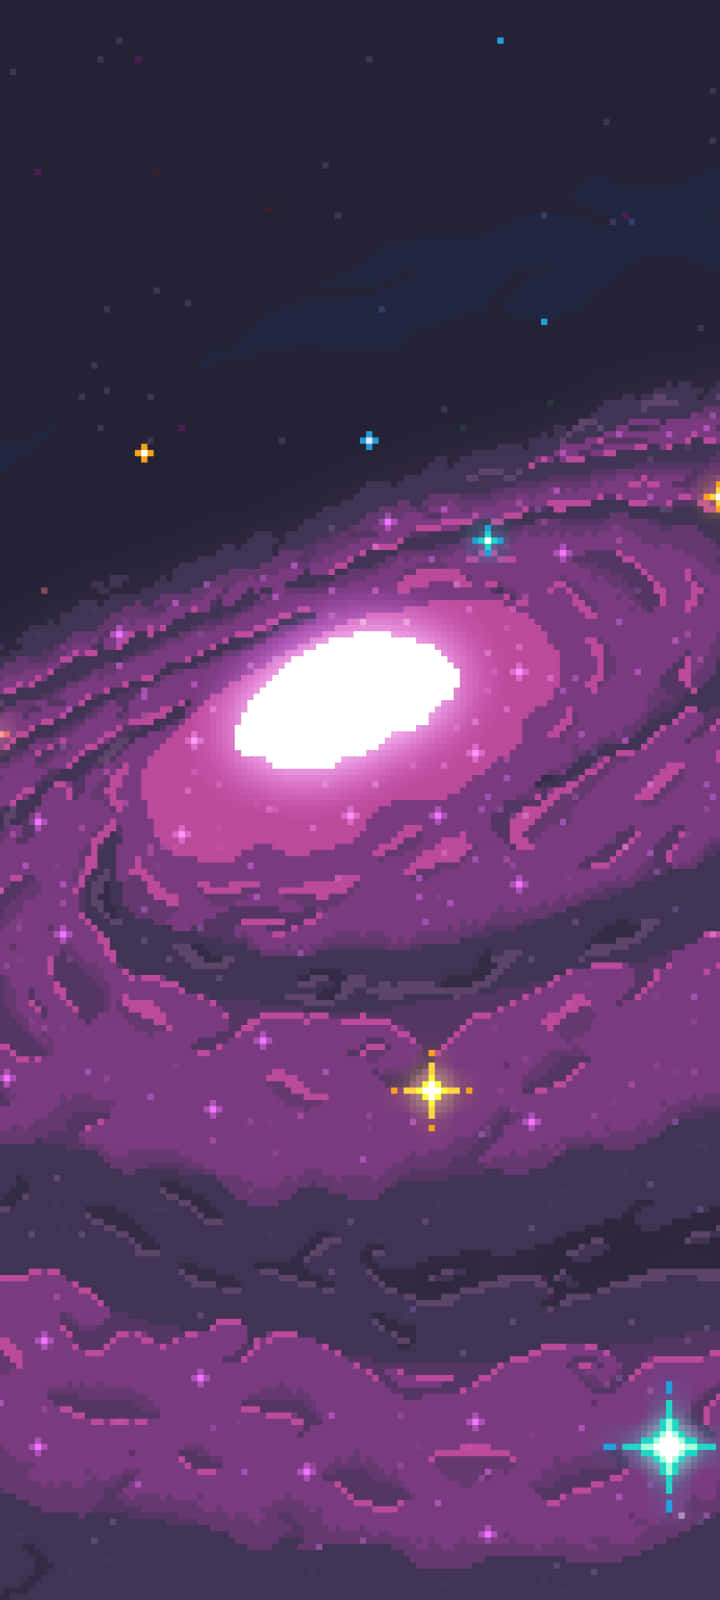 Pixel Galaxy - Galaxy Pixel Art Wallpaper